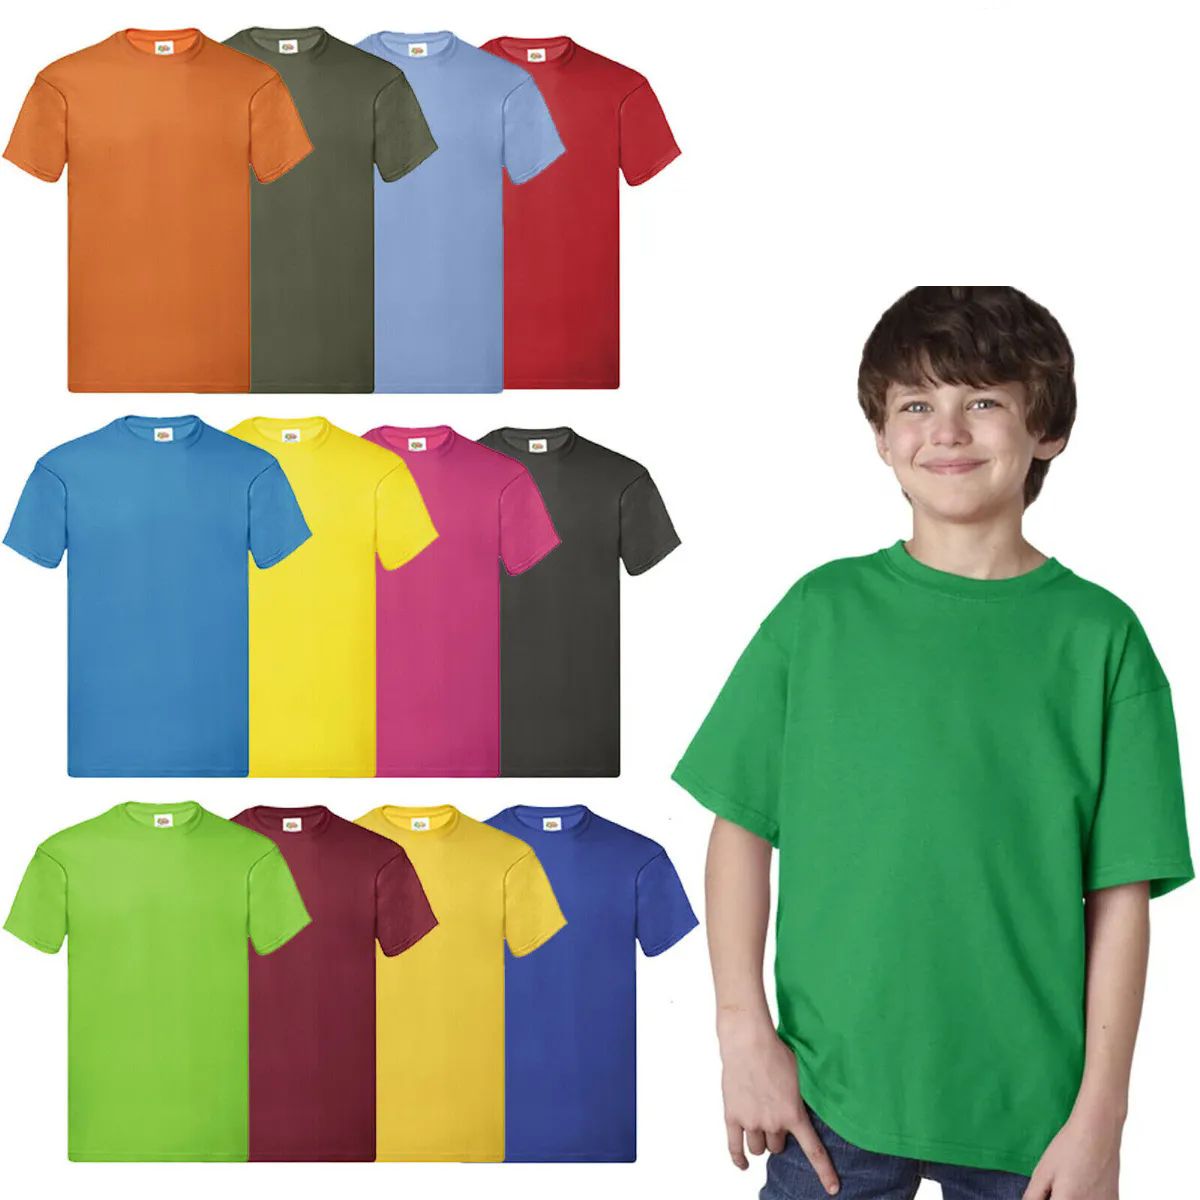 432 Bulk Billion Hats Kids Youth Cotton Assorted Colors T Shirts Size xs